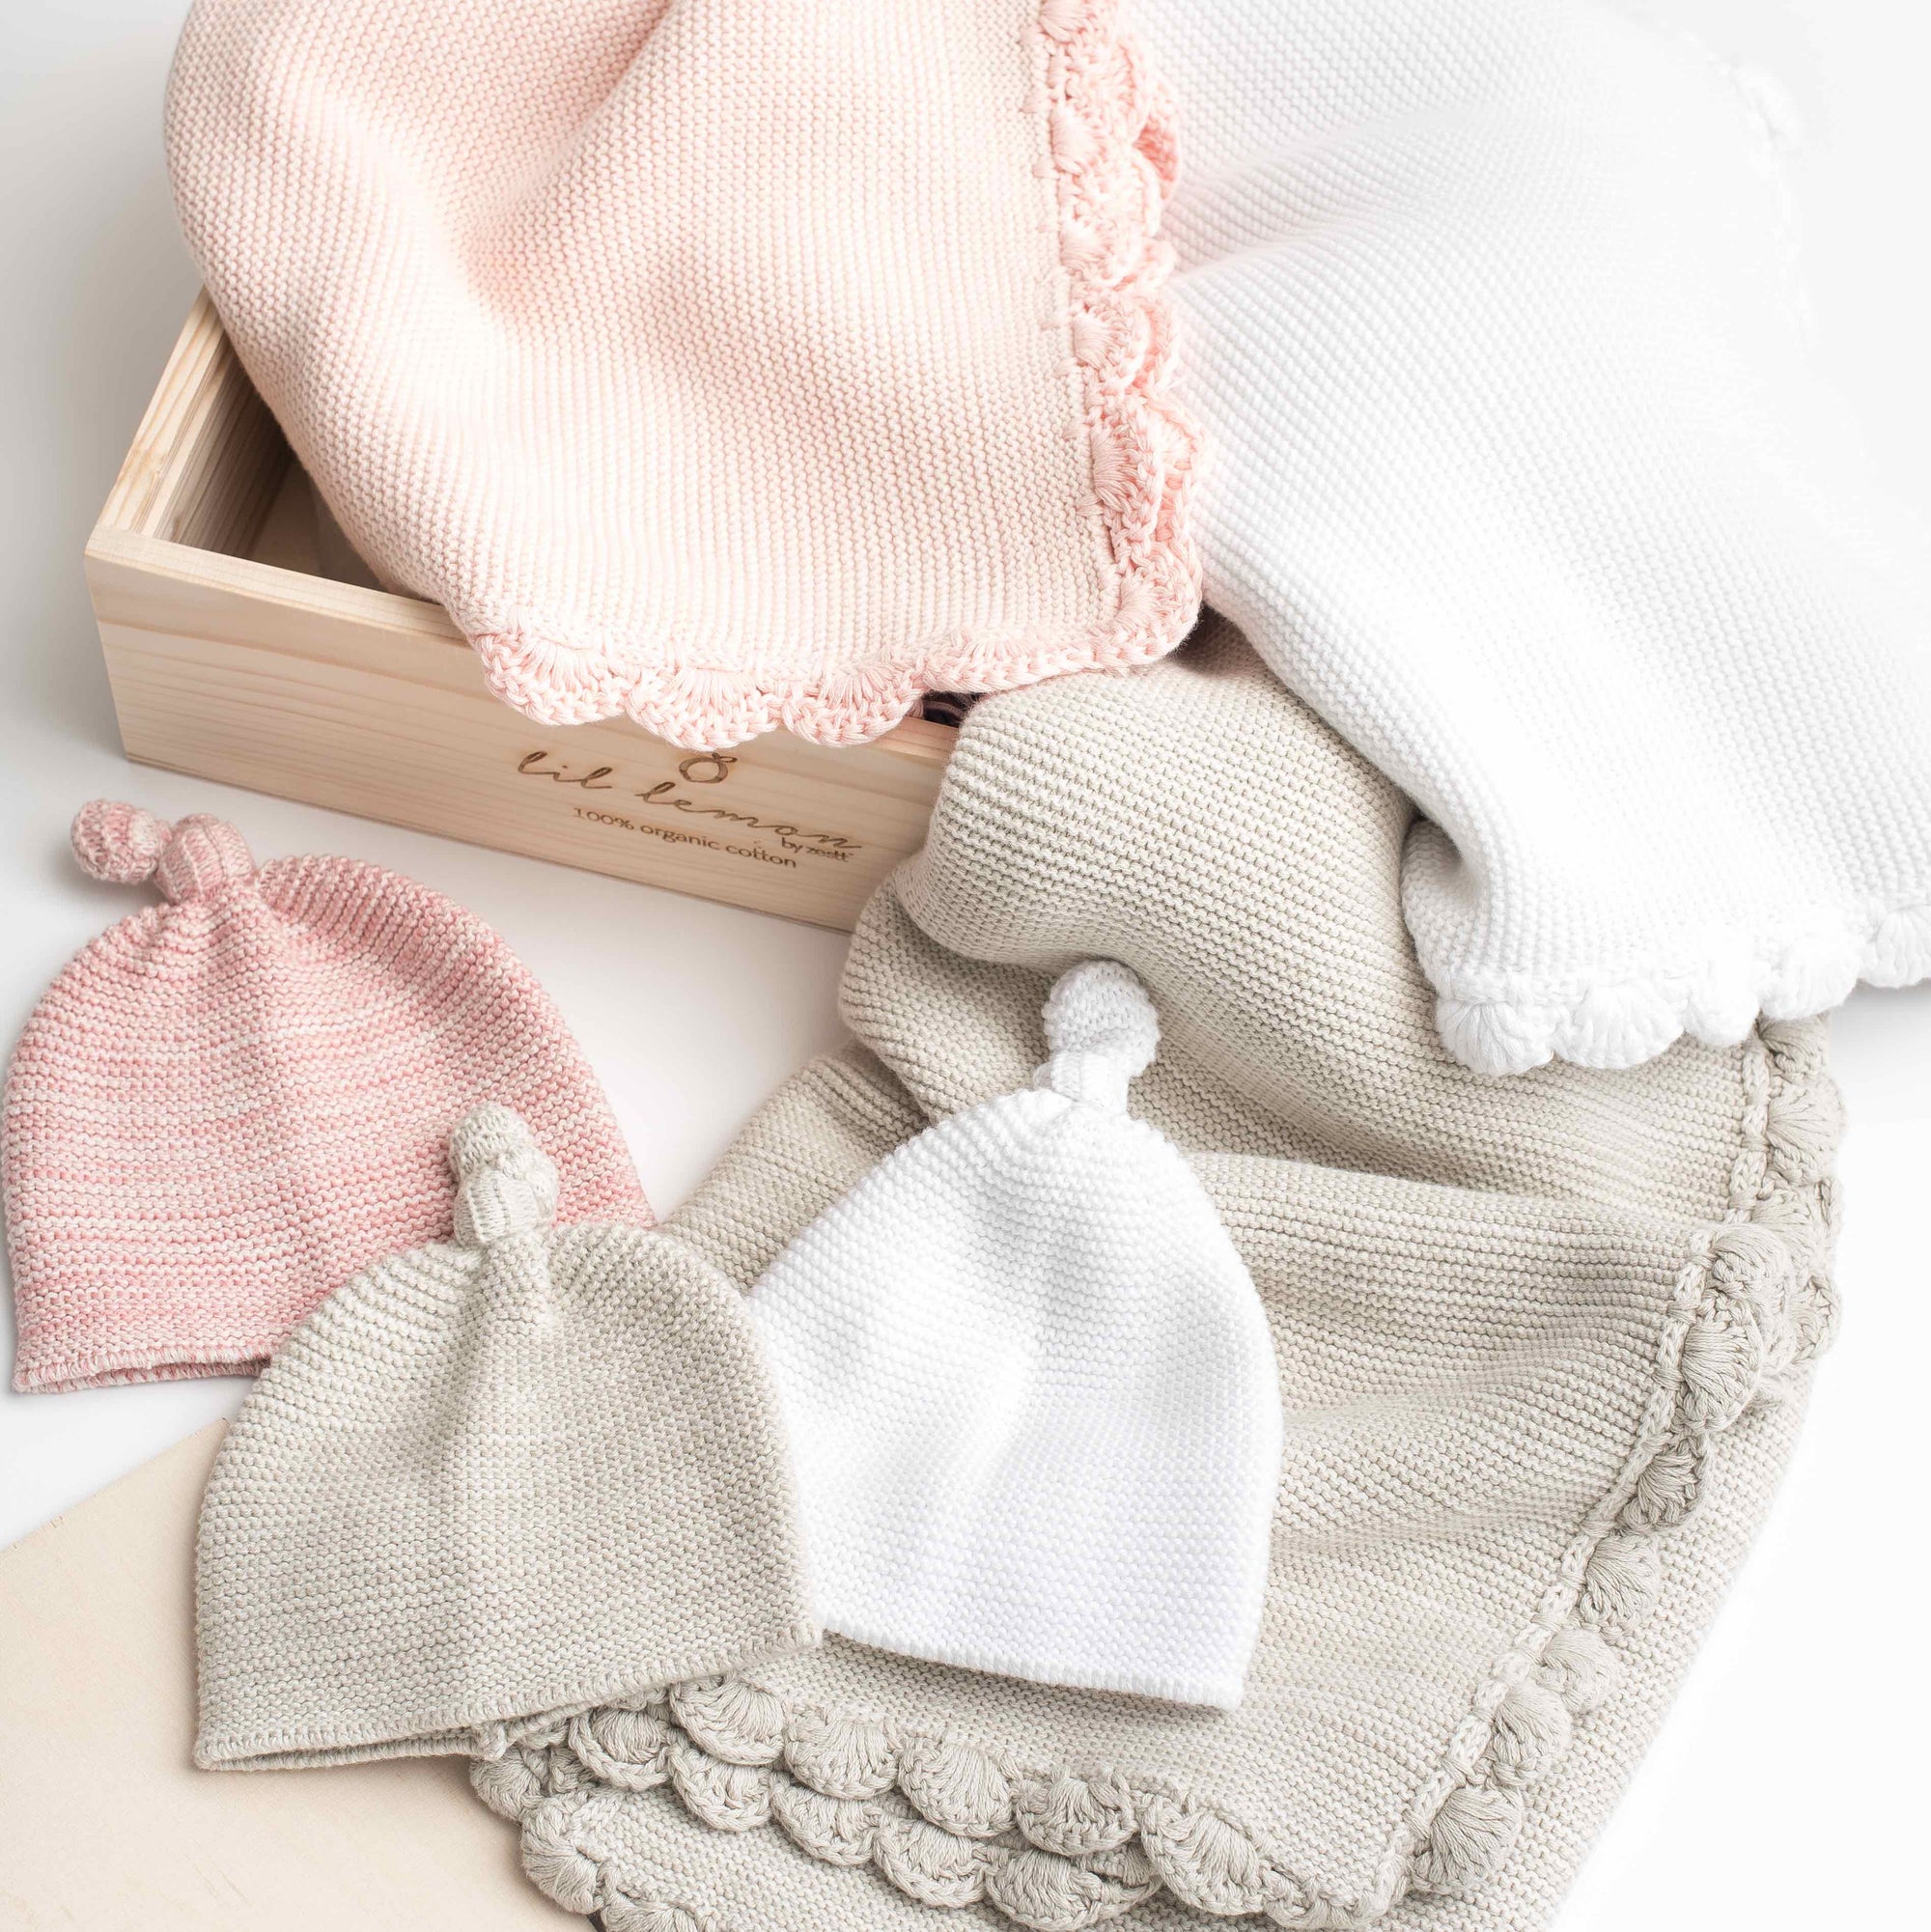 Spring 2018 Collection Sneak Peak: Heirloom Baby Blanket Gift Sets